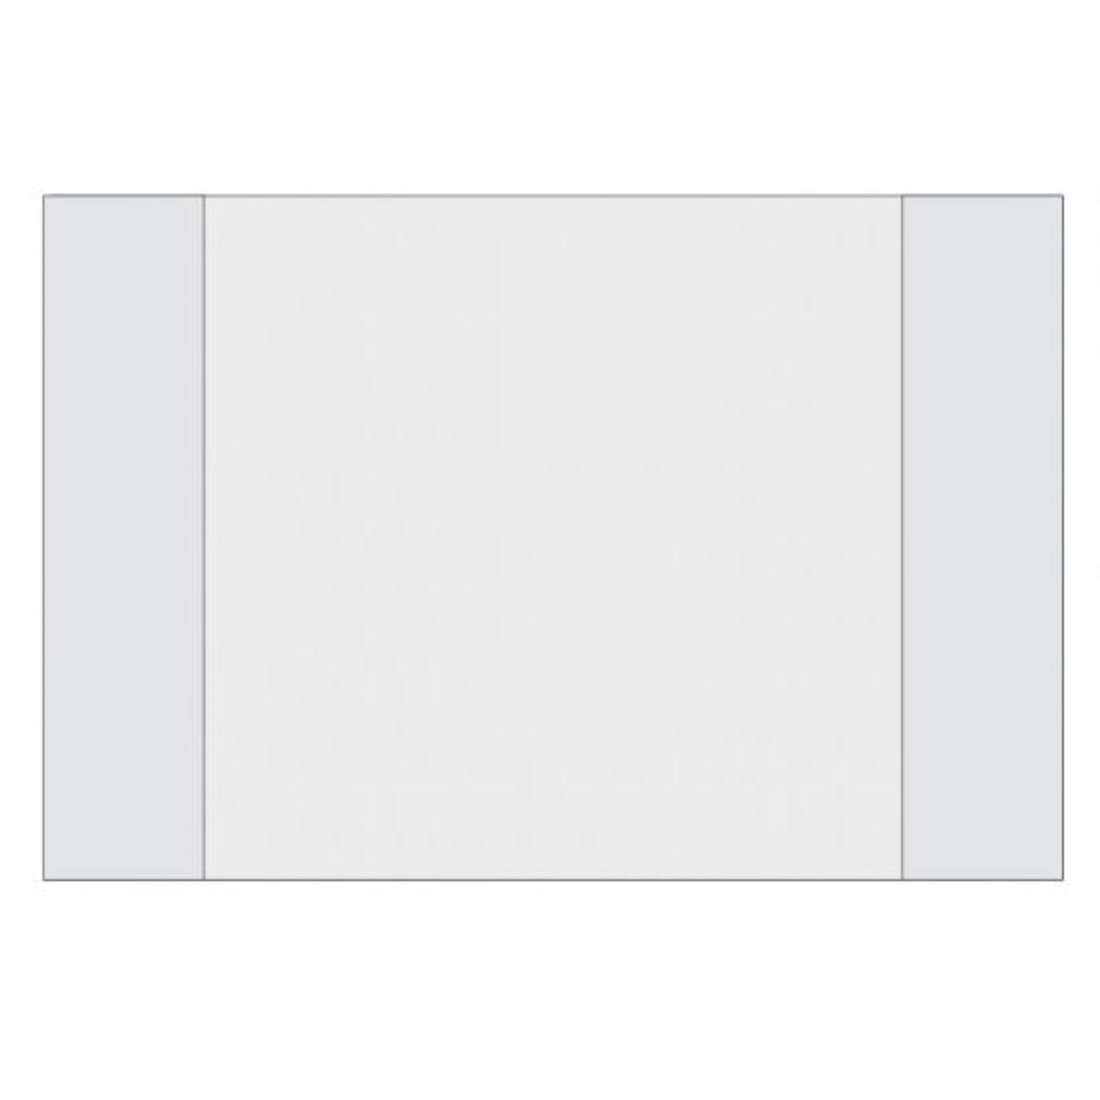 Linarts Obal na AJ sešit - 443 x 280 mm, čirý